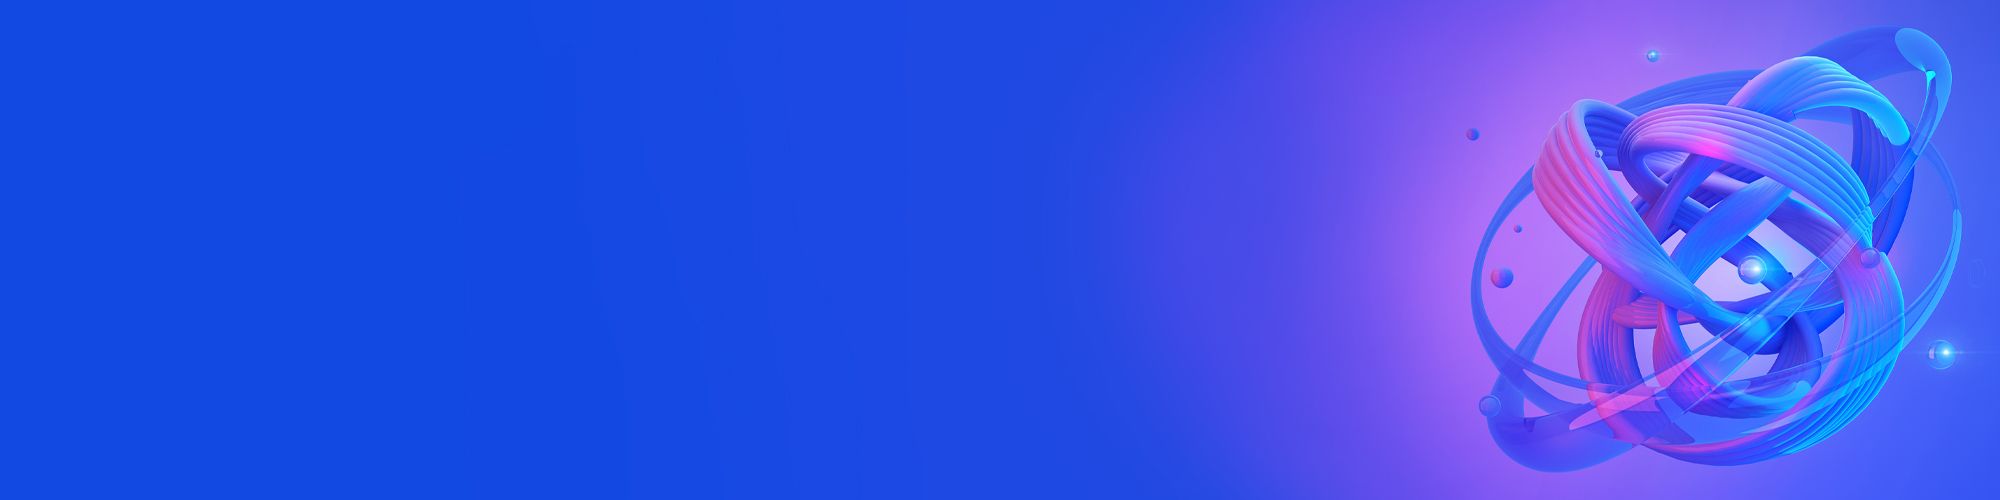 blue-purple-circular-vortex-abstract-banner